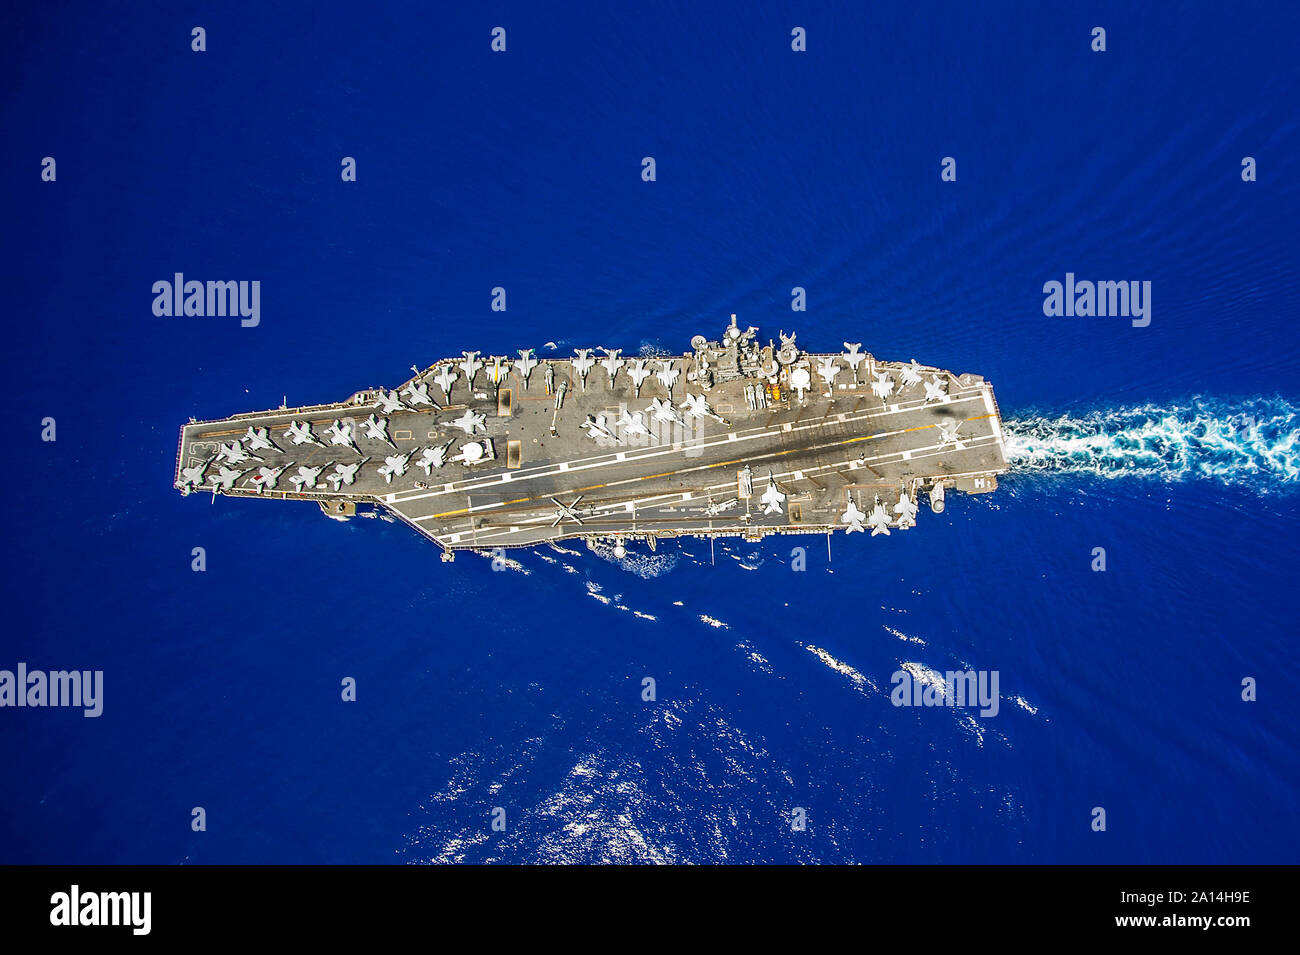 The Nimitz-class aircraft carrier USS George Washington. Stock Photo